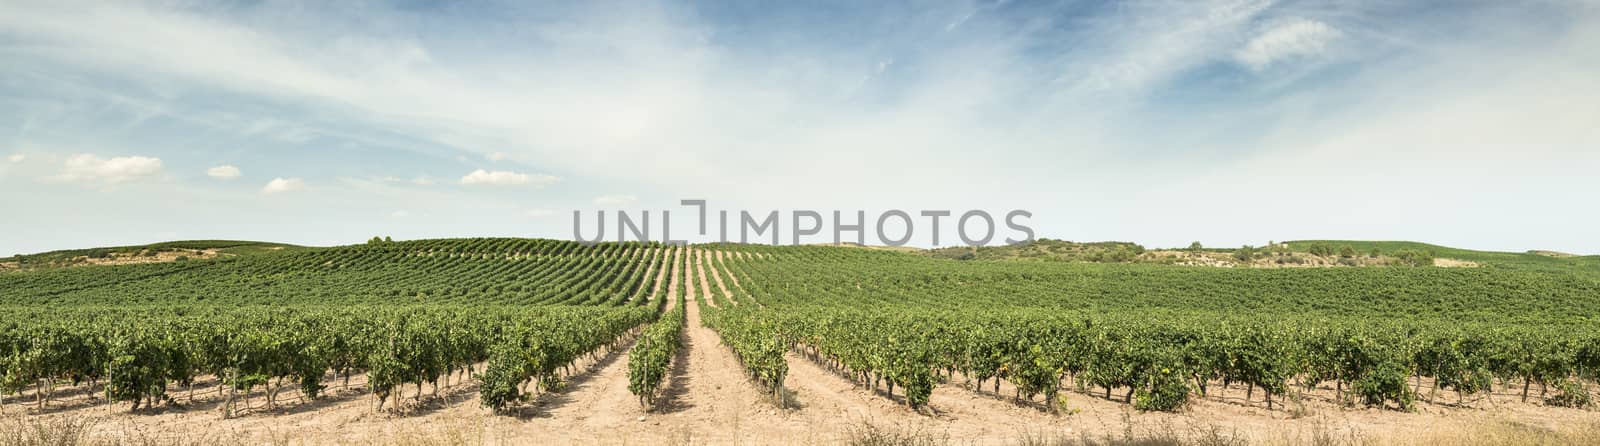 Vine grapes panorama on sunlight